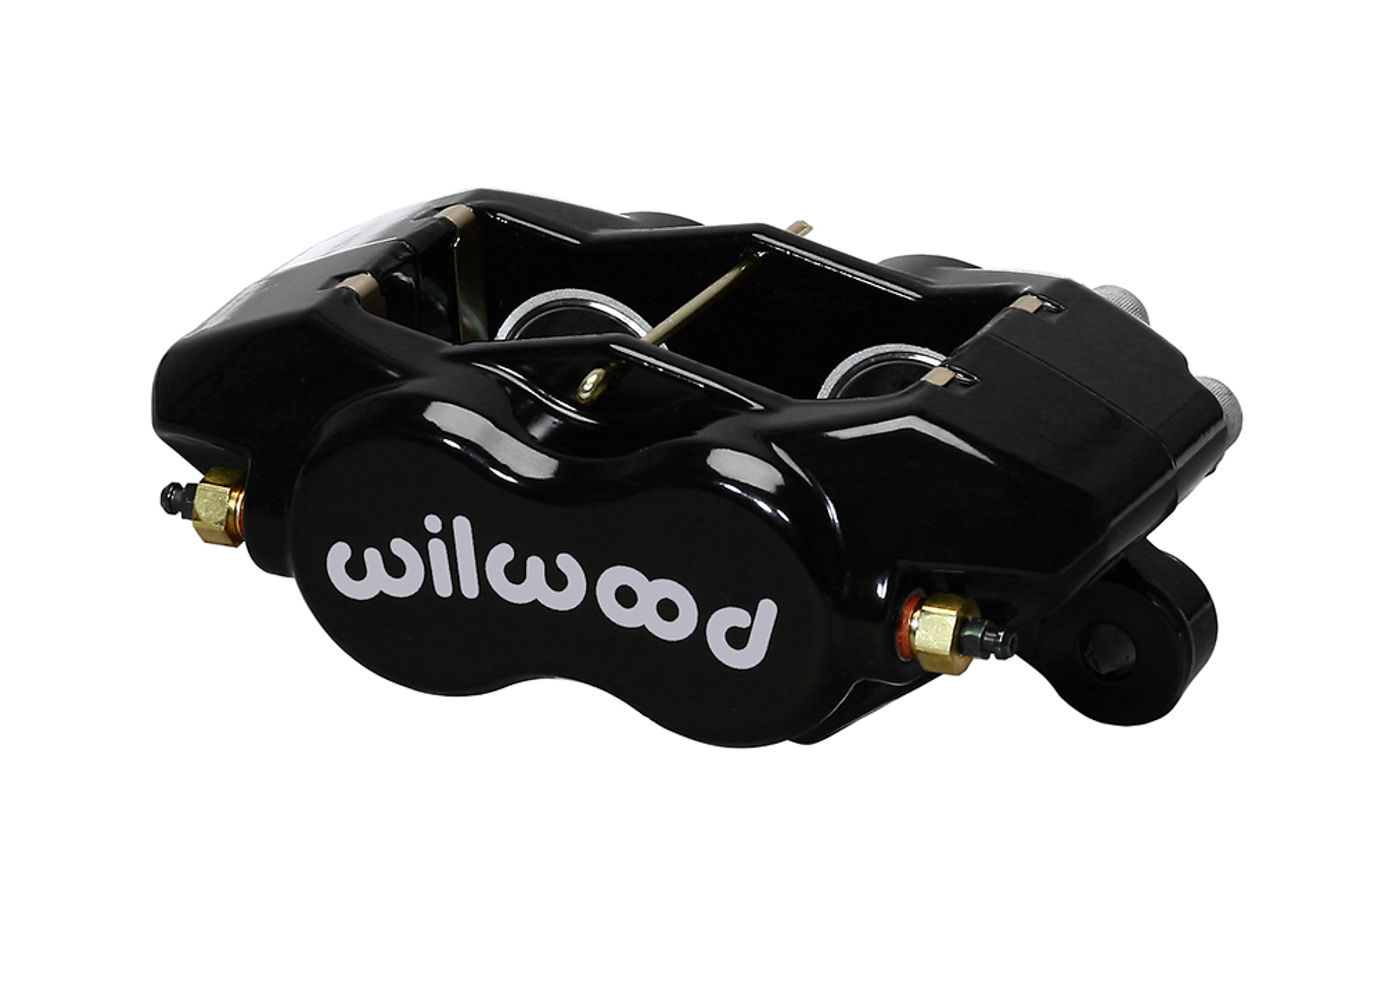 Wilwood 120-13842-BK Brake Caliper, Forged Dynalite, 4 Piston, Aluminum, Black Powder Coat, 13.06 in OD x 0.810 in Thick Rotor, 5.250 in Lug Mount, Each